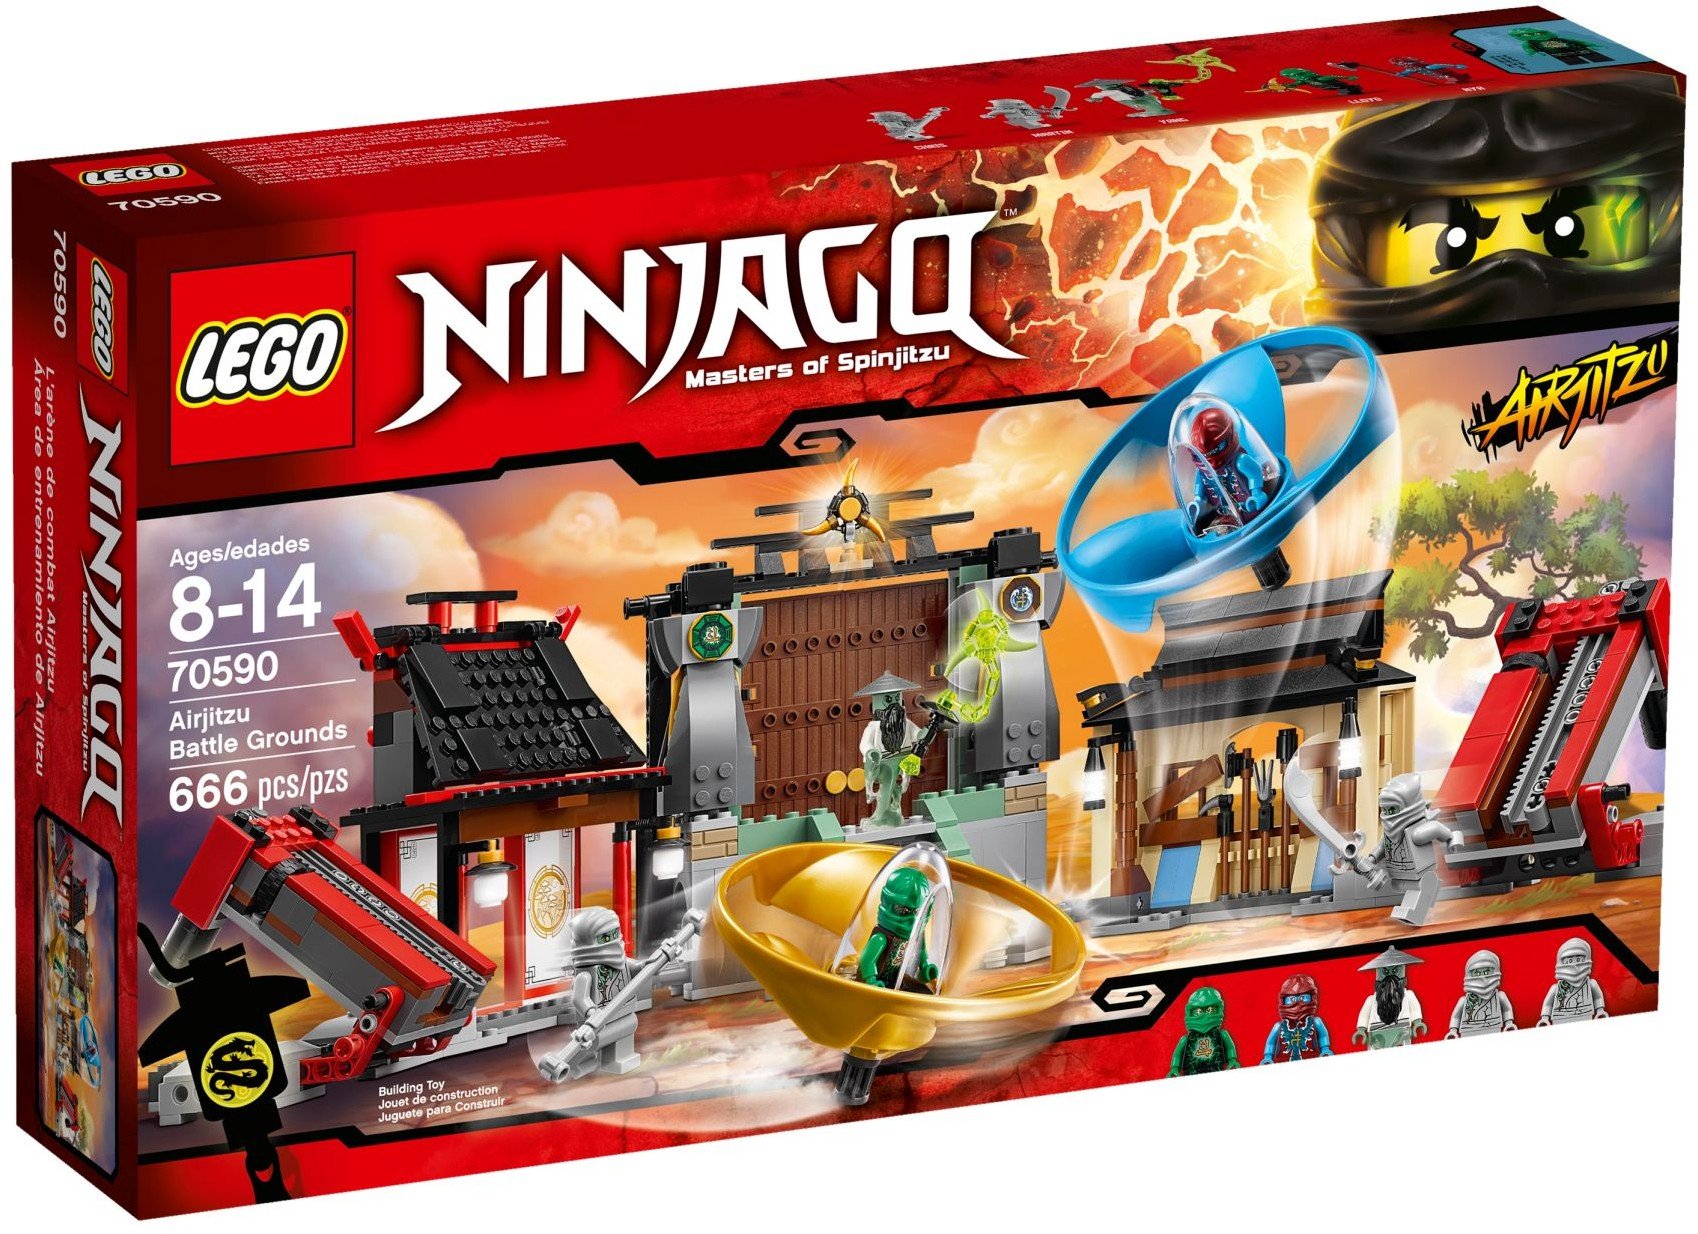 LEGO Ninjago Airjitzu Battle Grounds Set 70590 - KR